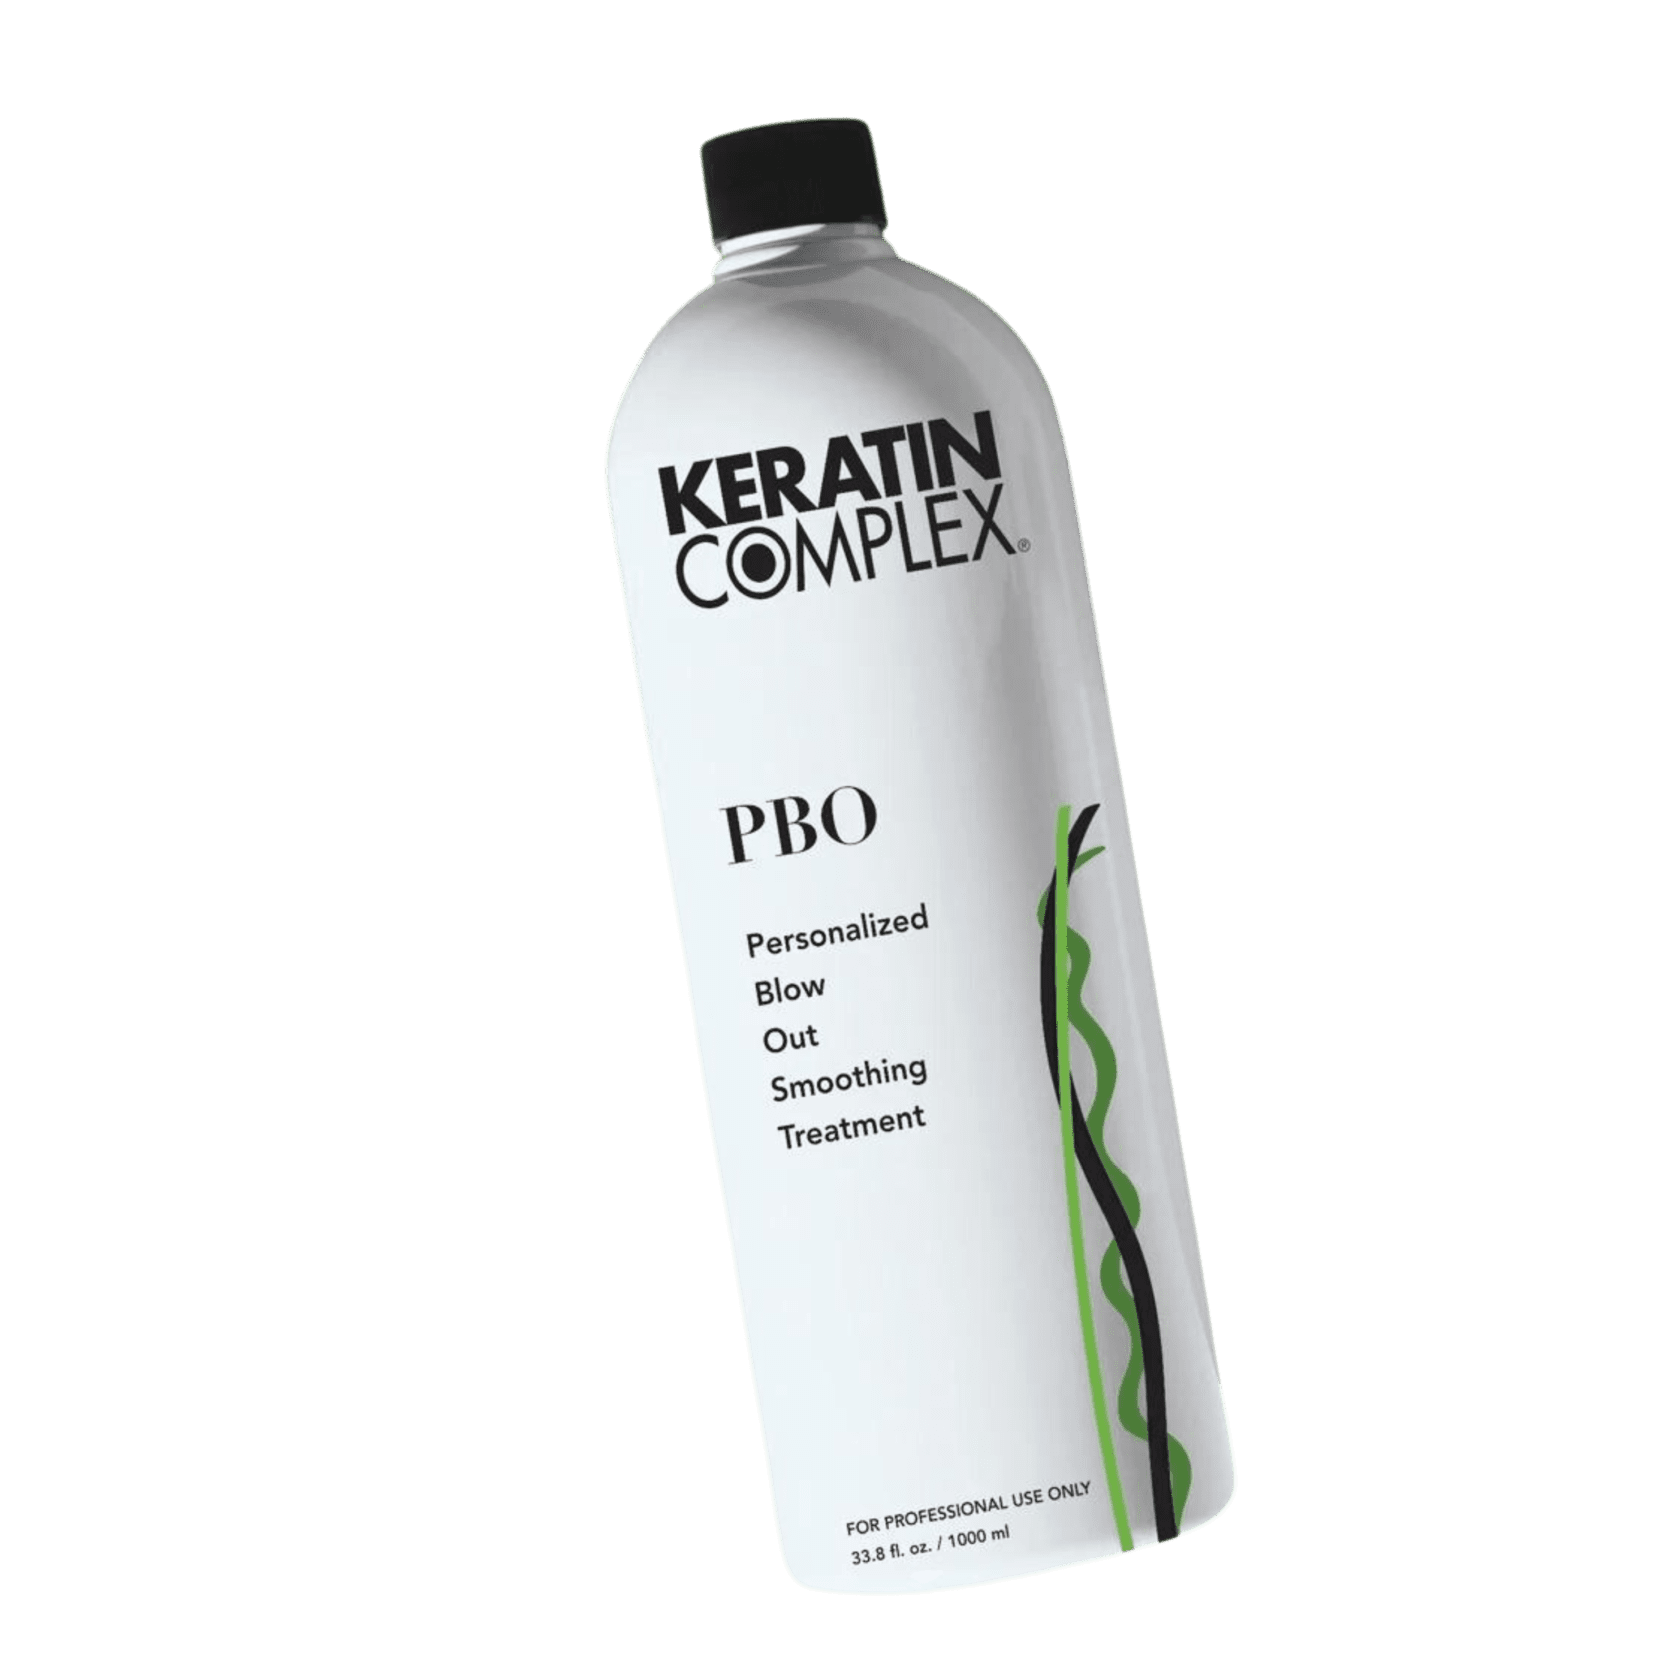 pbo-keratin-complex